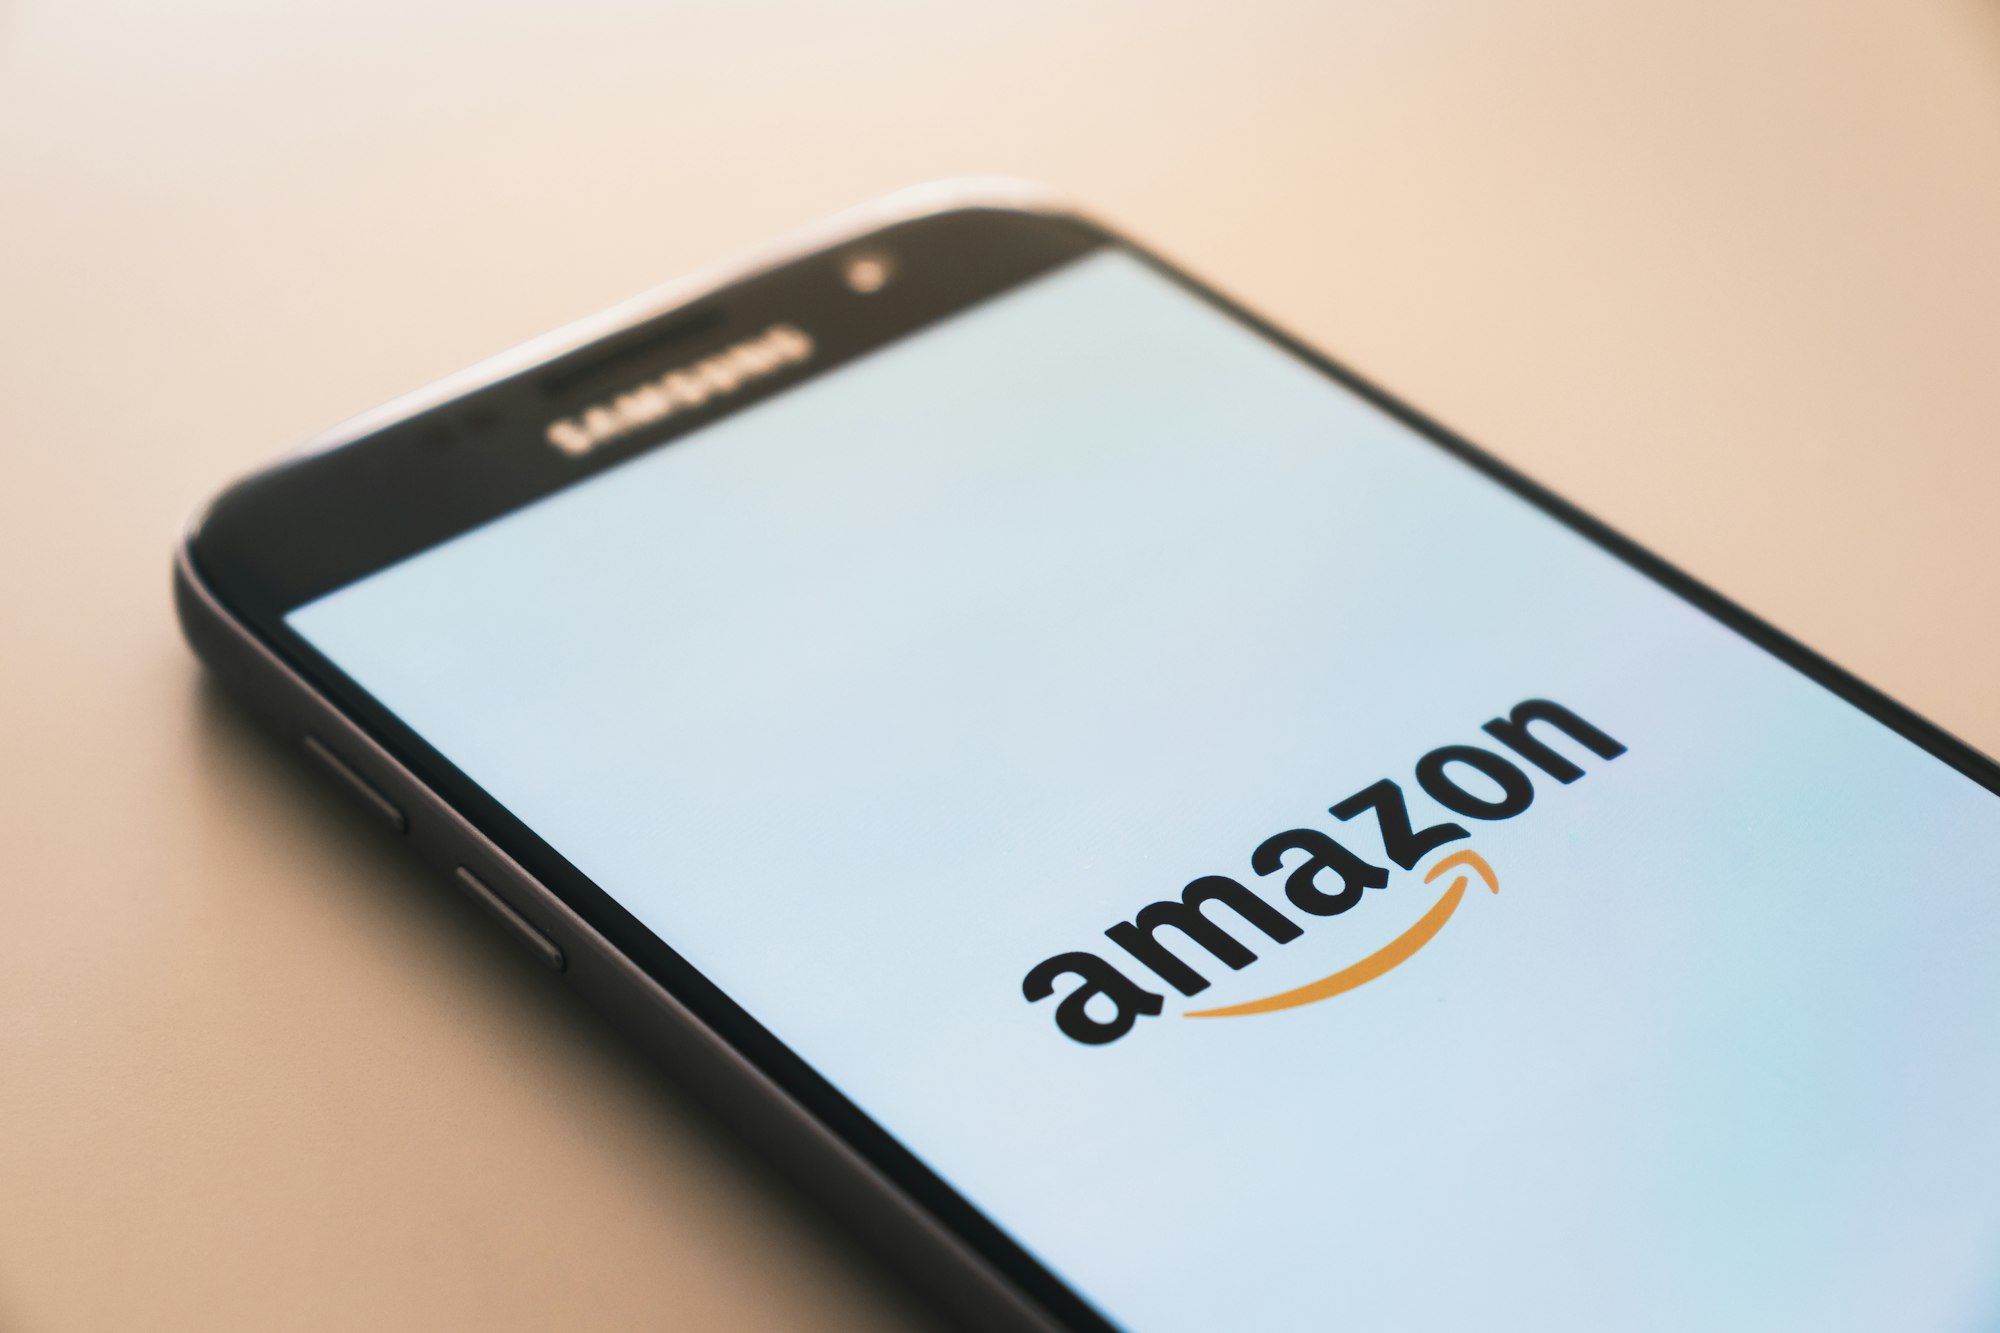 Amazon is investing $7.2 billion in Israel